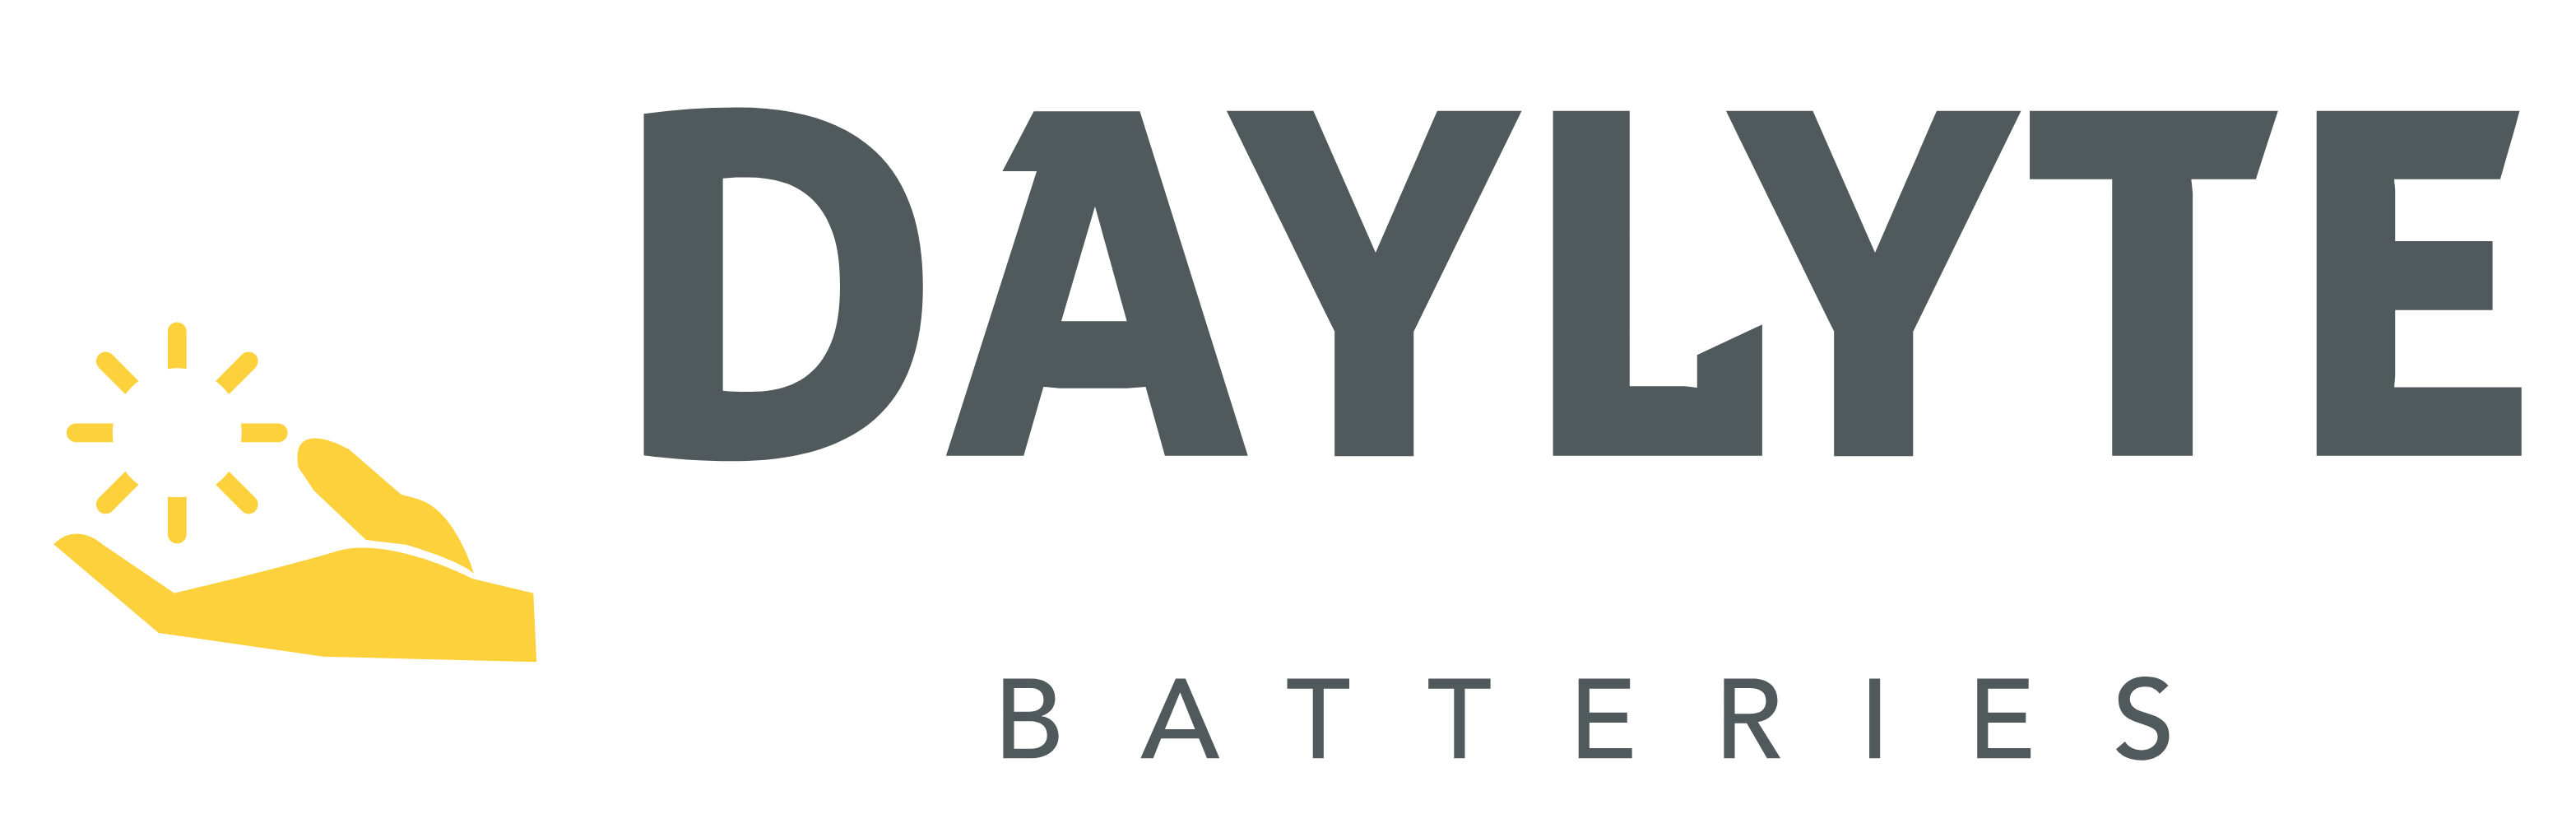 DayLyte Batteries 